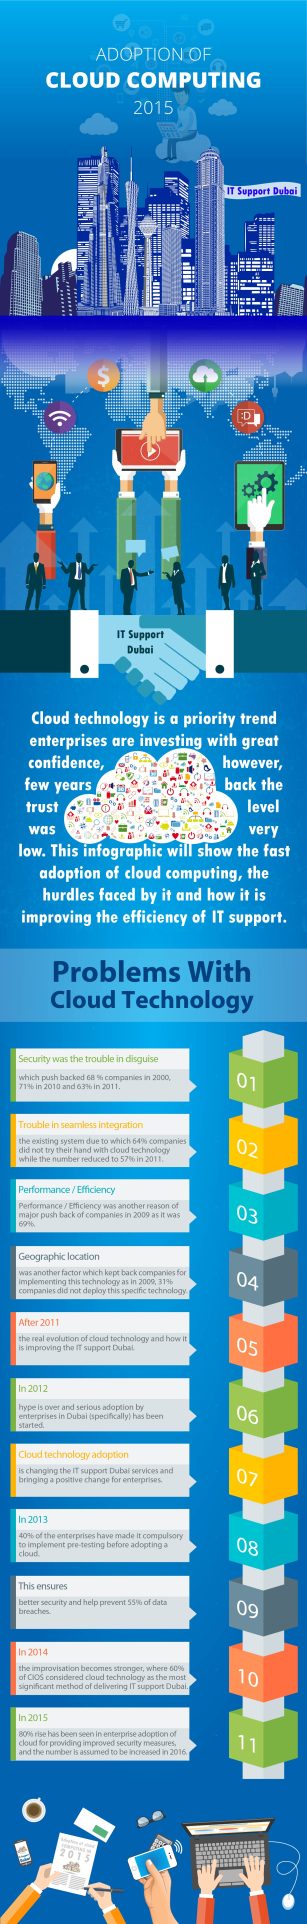 Adoption Of Cloud Computing In 2015